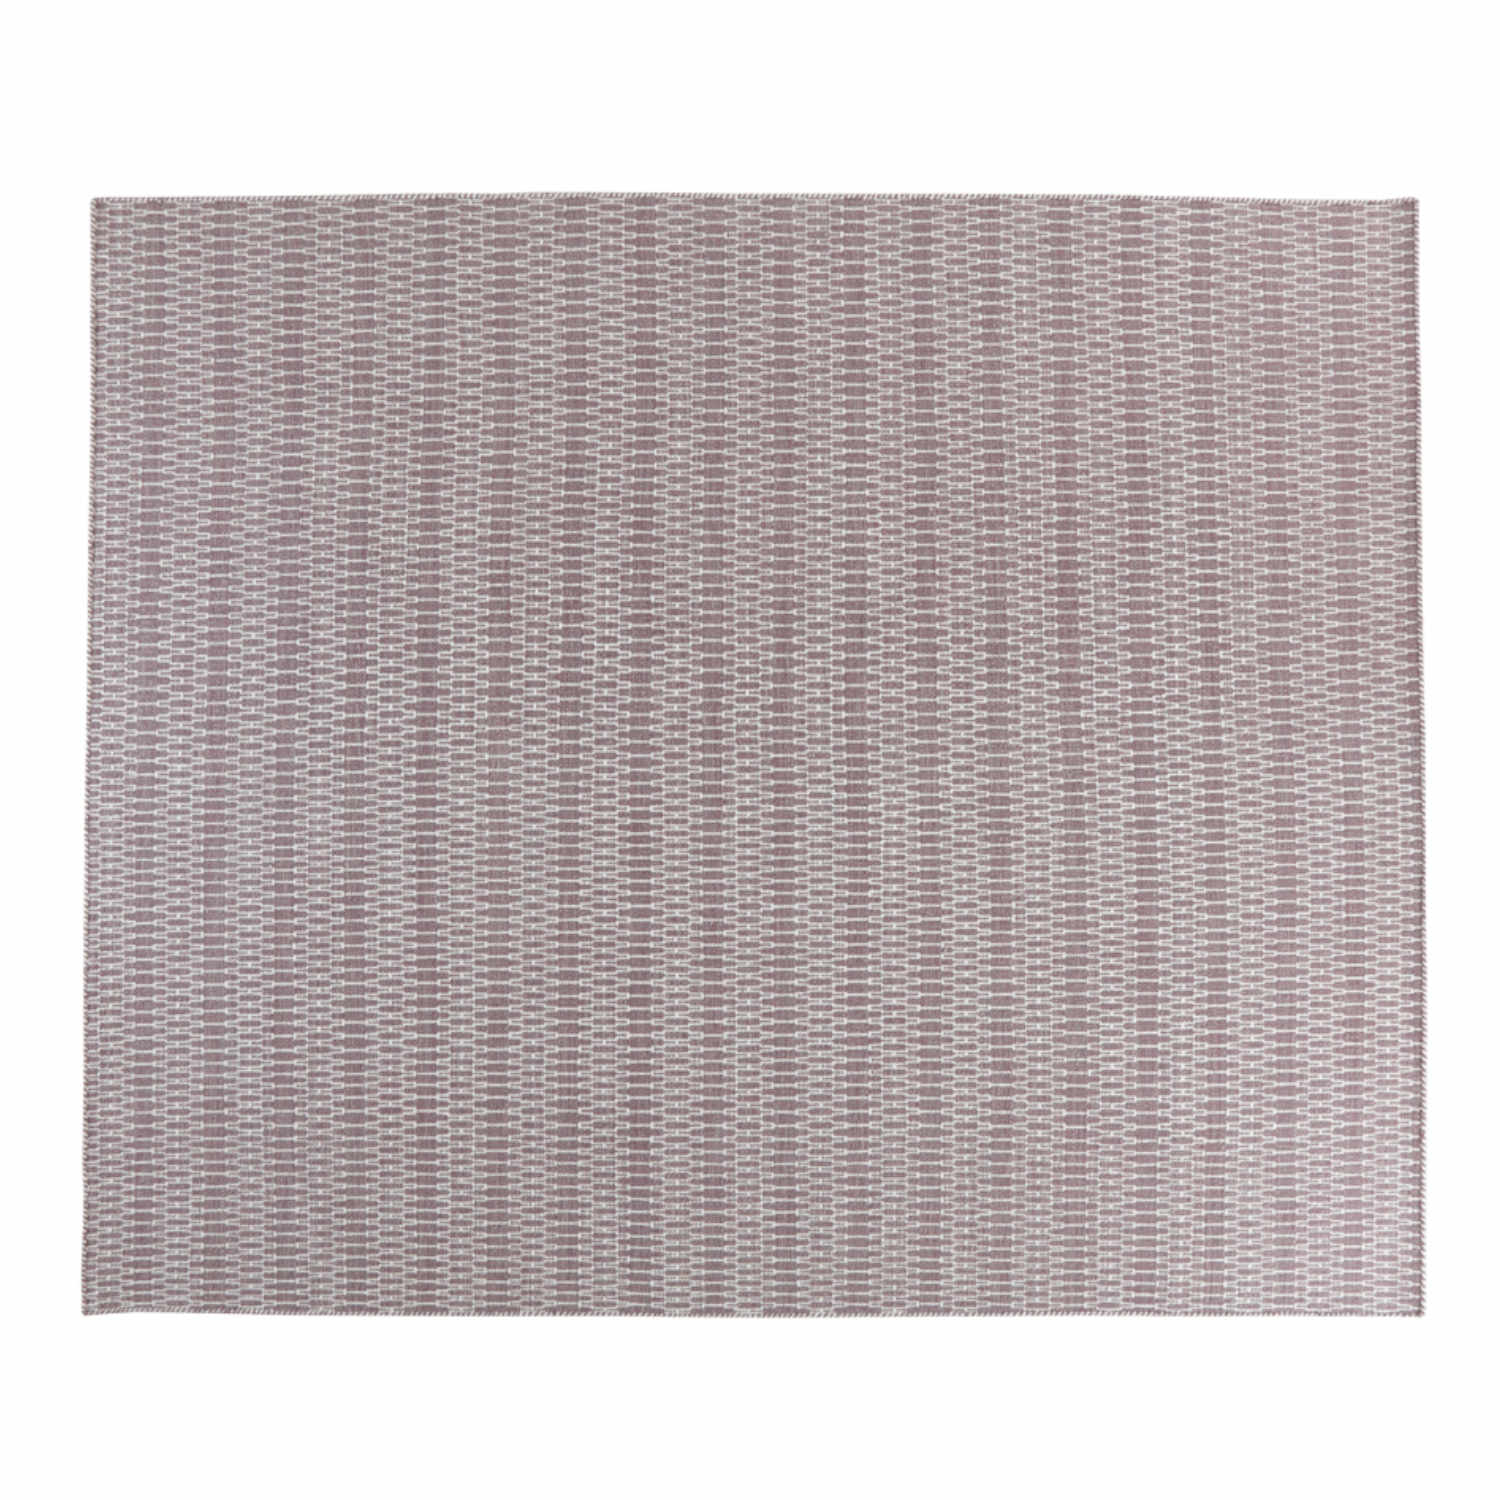 VanGard Vol. II Teppich, Grösse 170 x 240 cm, Farbe trooper von miinu